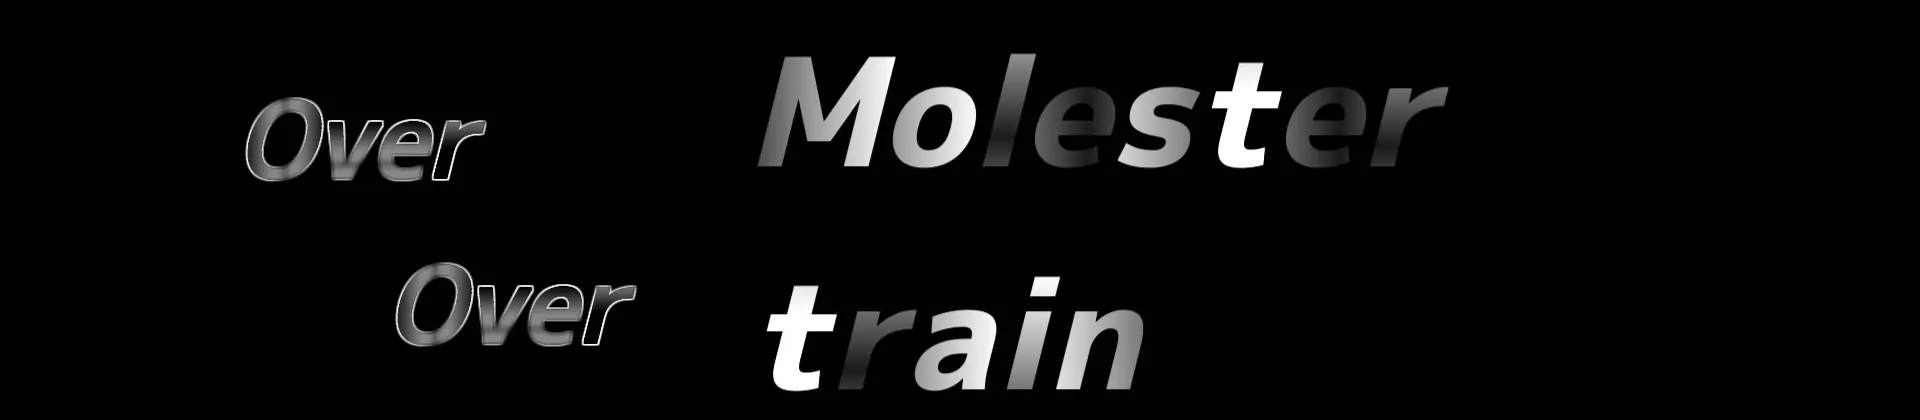 Round and Round Molester Train main image